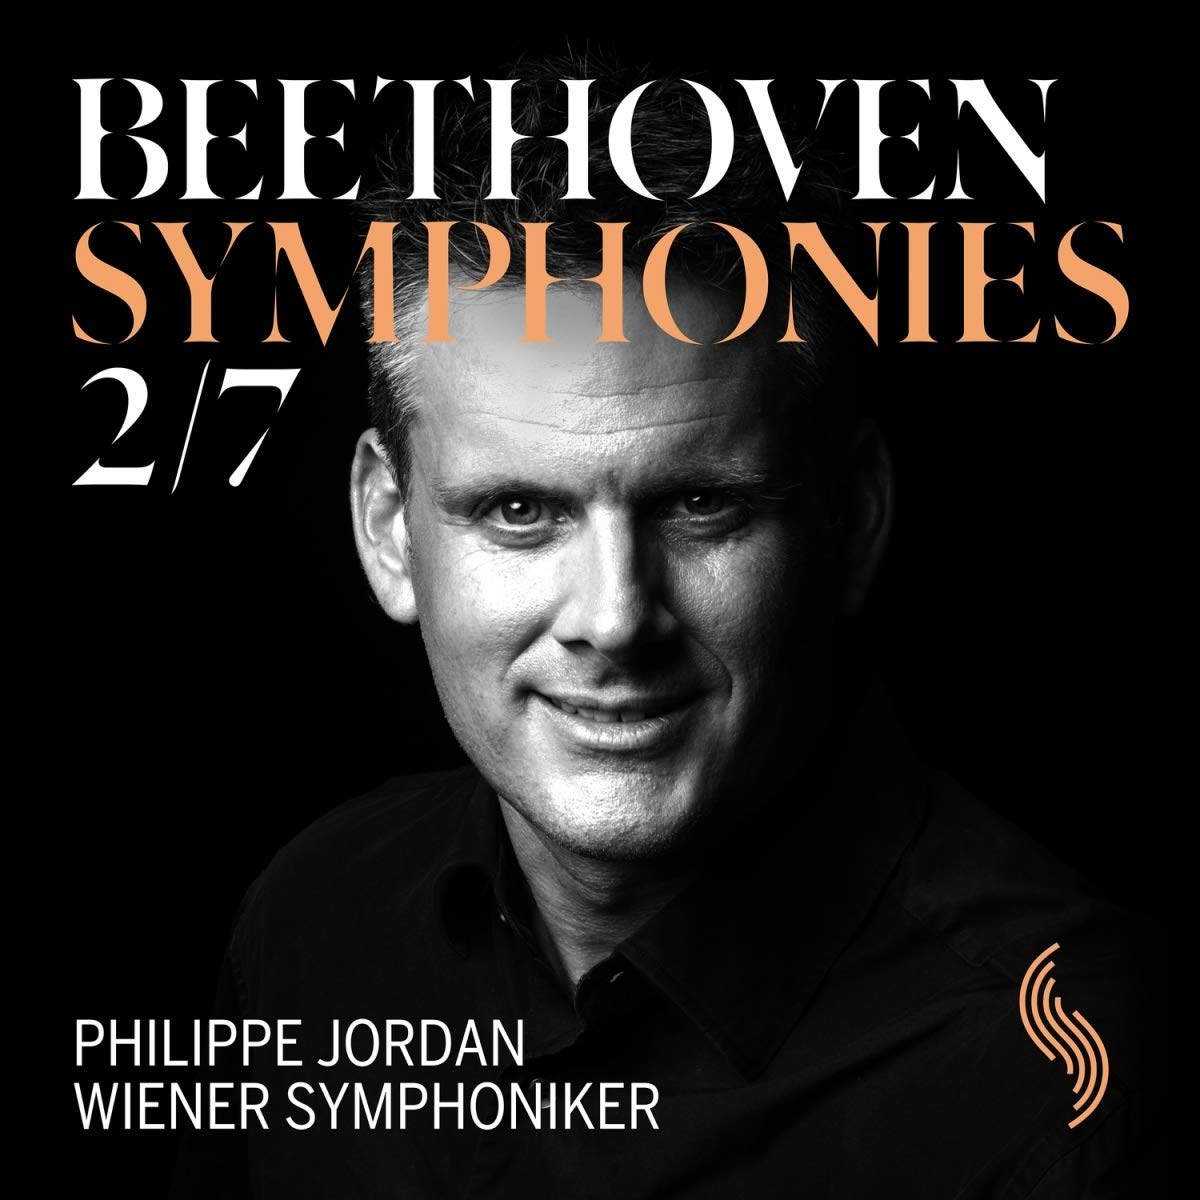 Philippe Jordan, Beethoven Symphonies